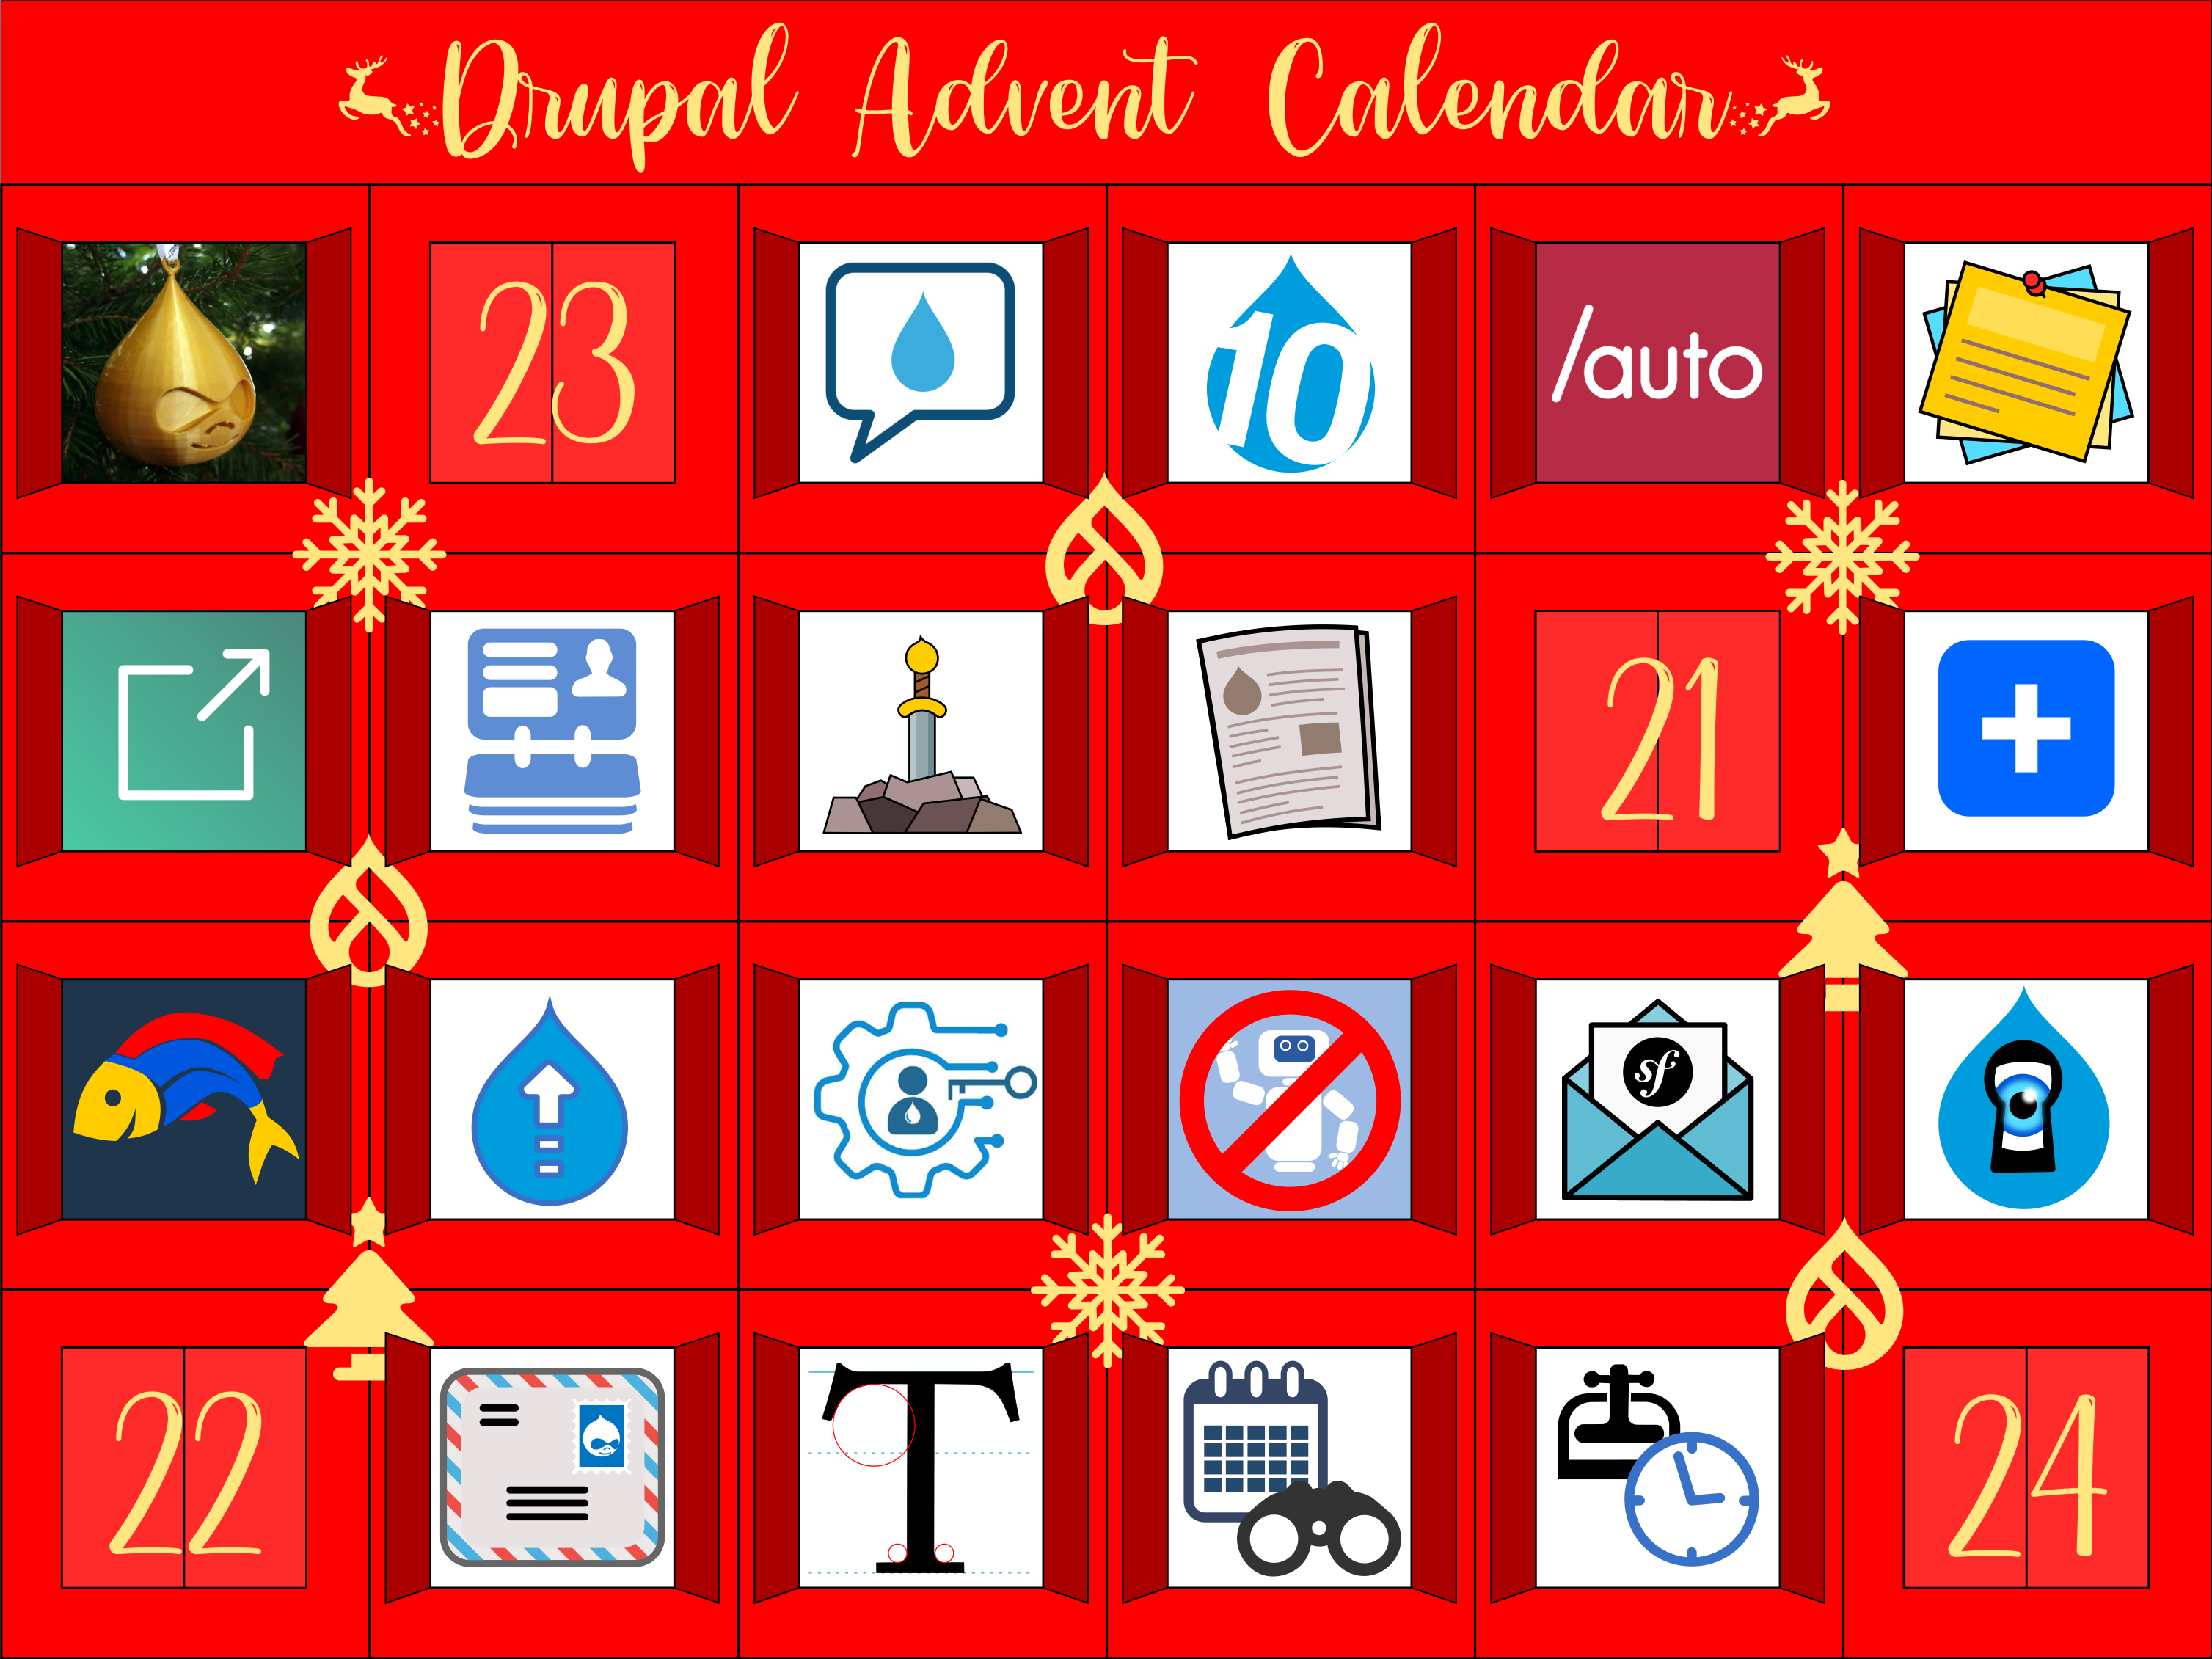 Advent calendar with door 20 open showing a 3D printed bauble